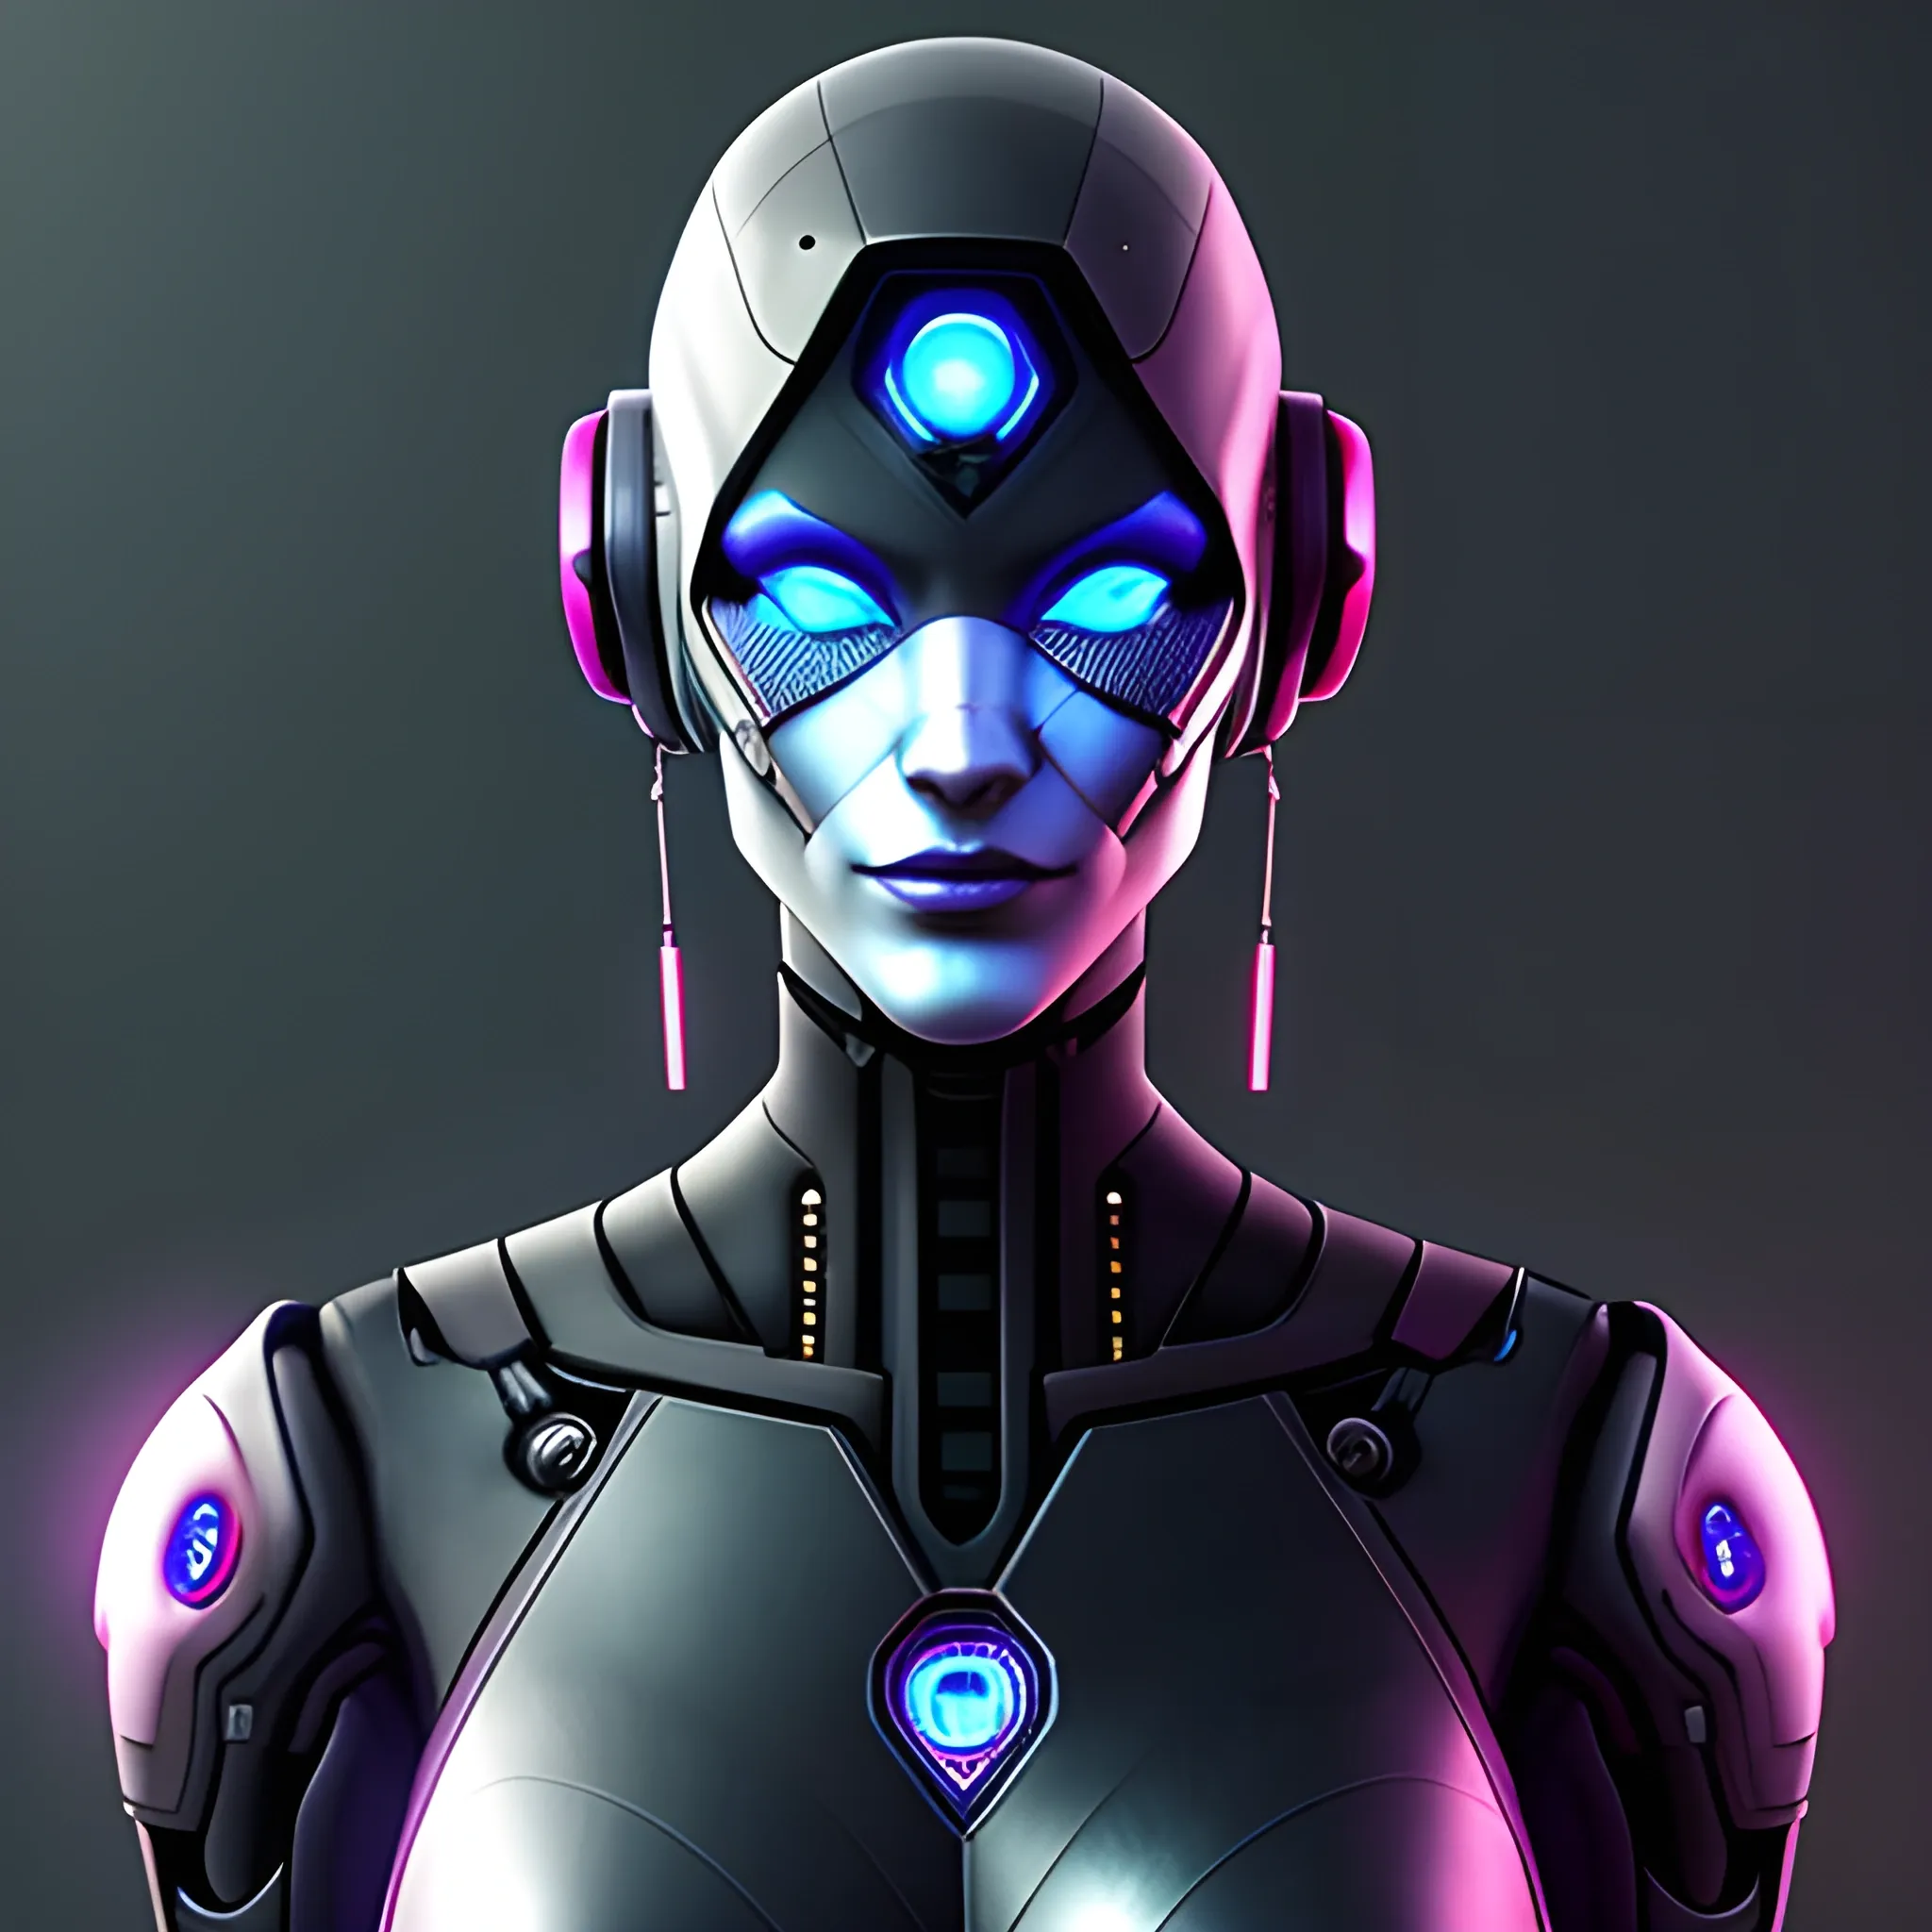 Cyberpunk style robot avatar, digital style, high quality full o ...